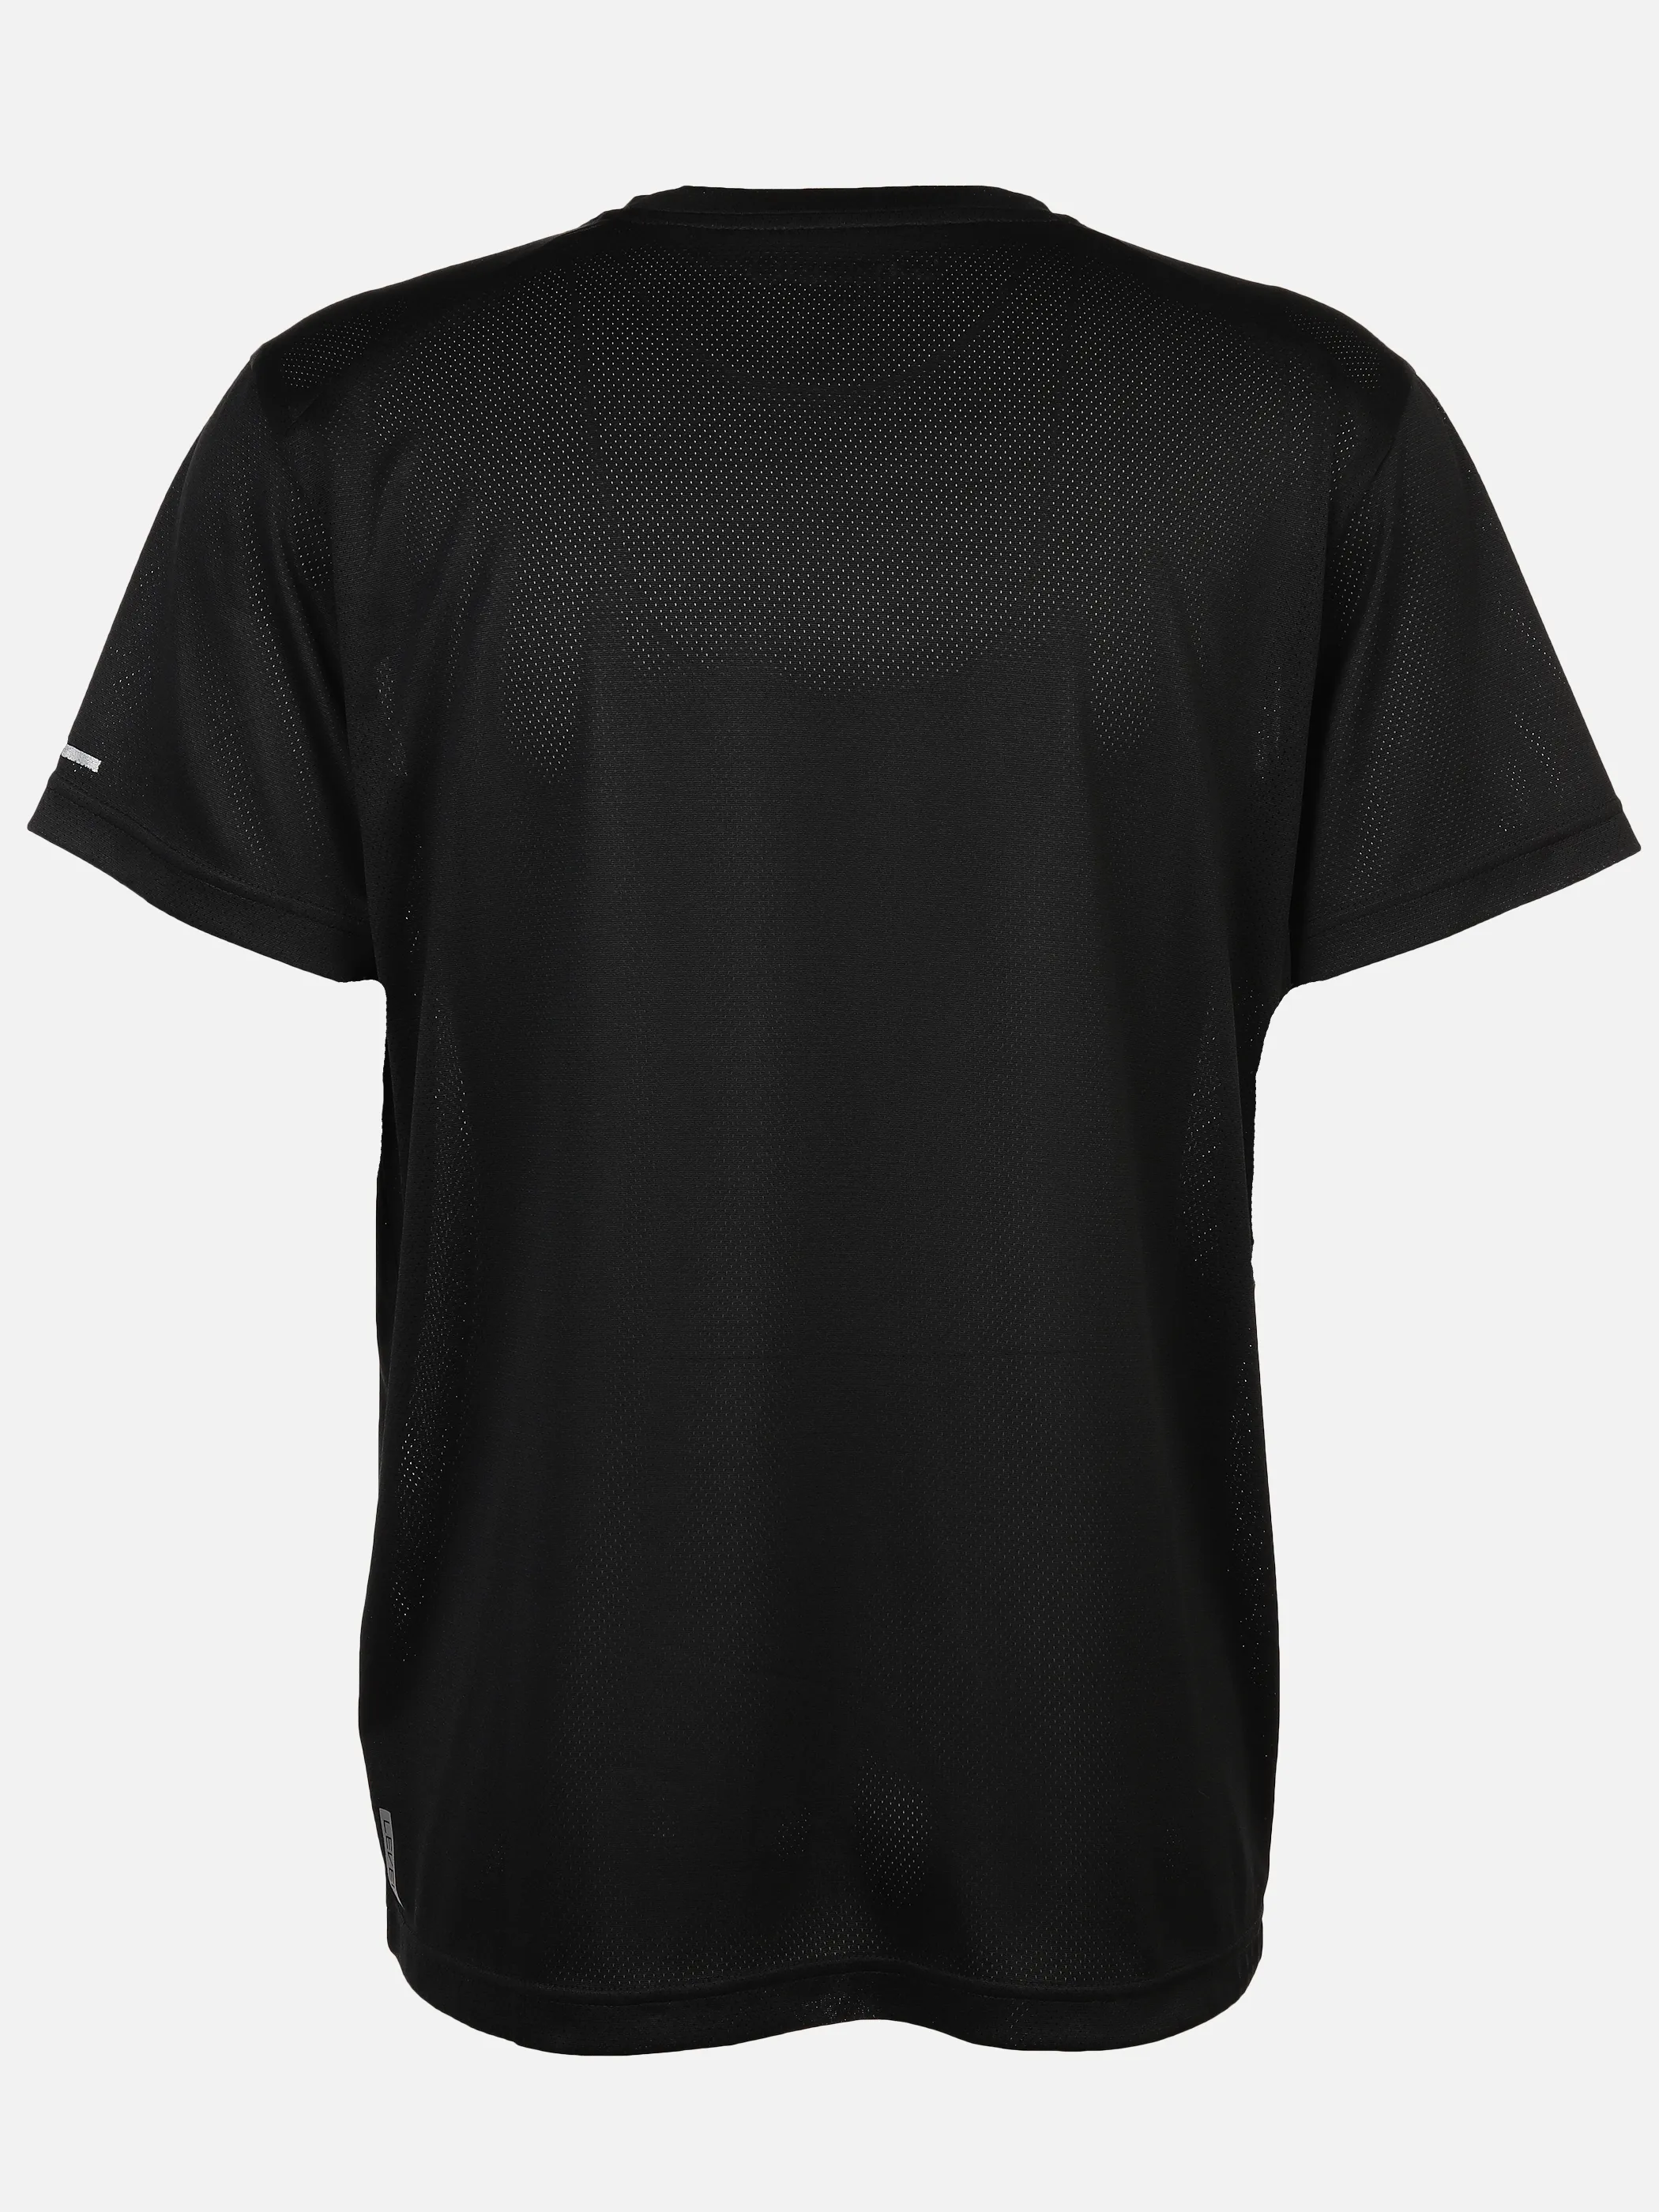 Grinario Sports He- Sport T-Shirt Schwarz 890157 BLACK 2